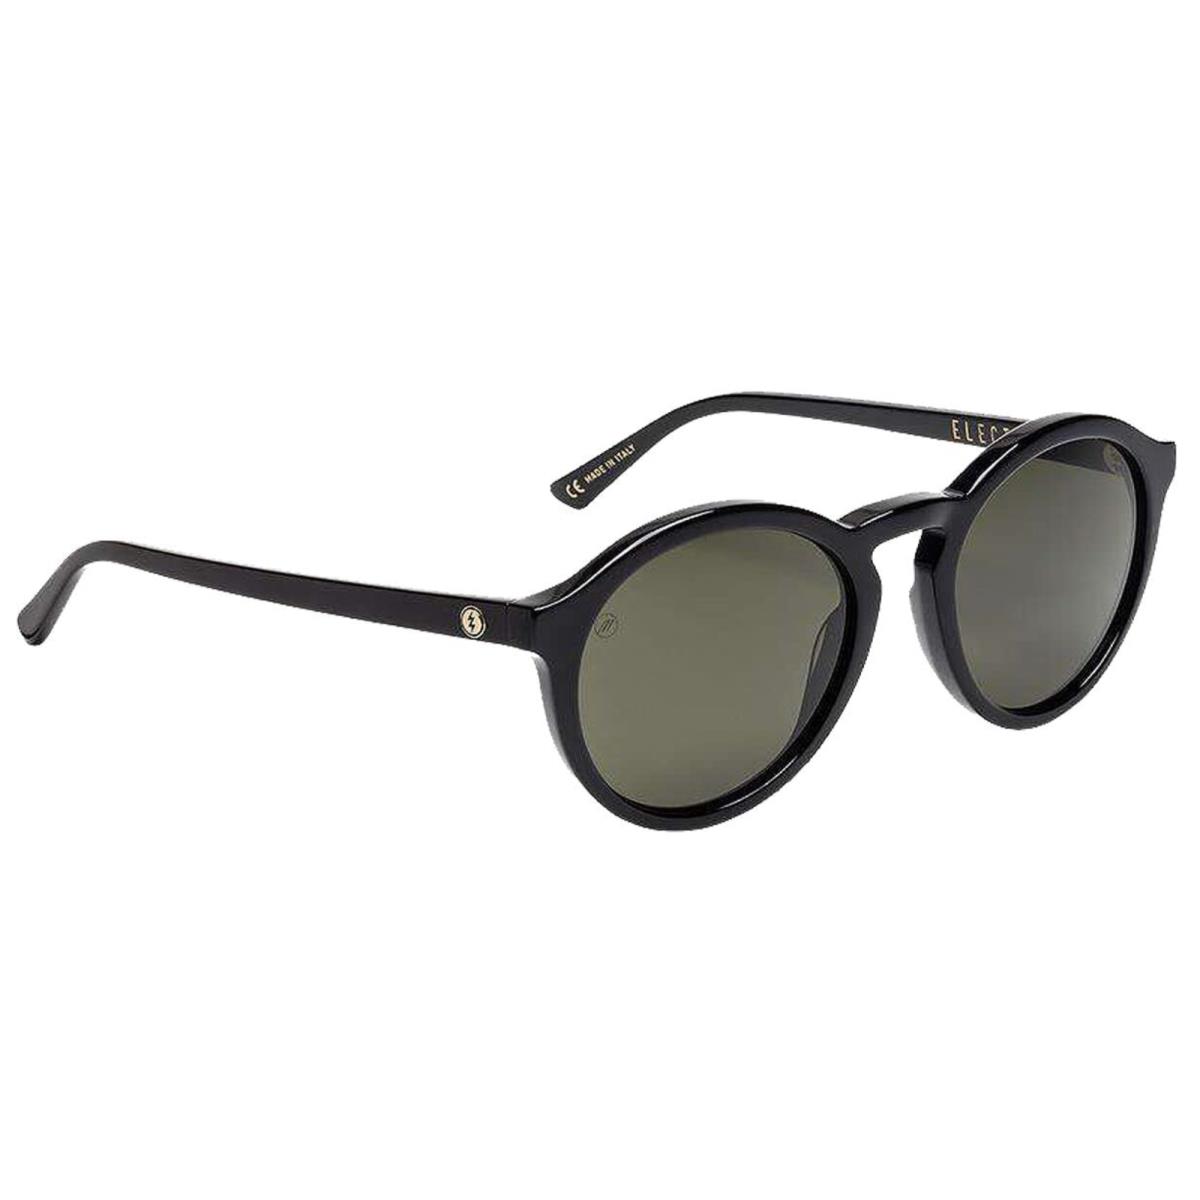 Electric Moon Sunglasses-black-grey Polarized Lens